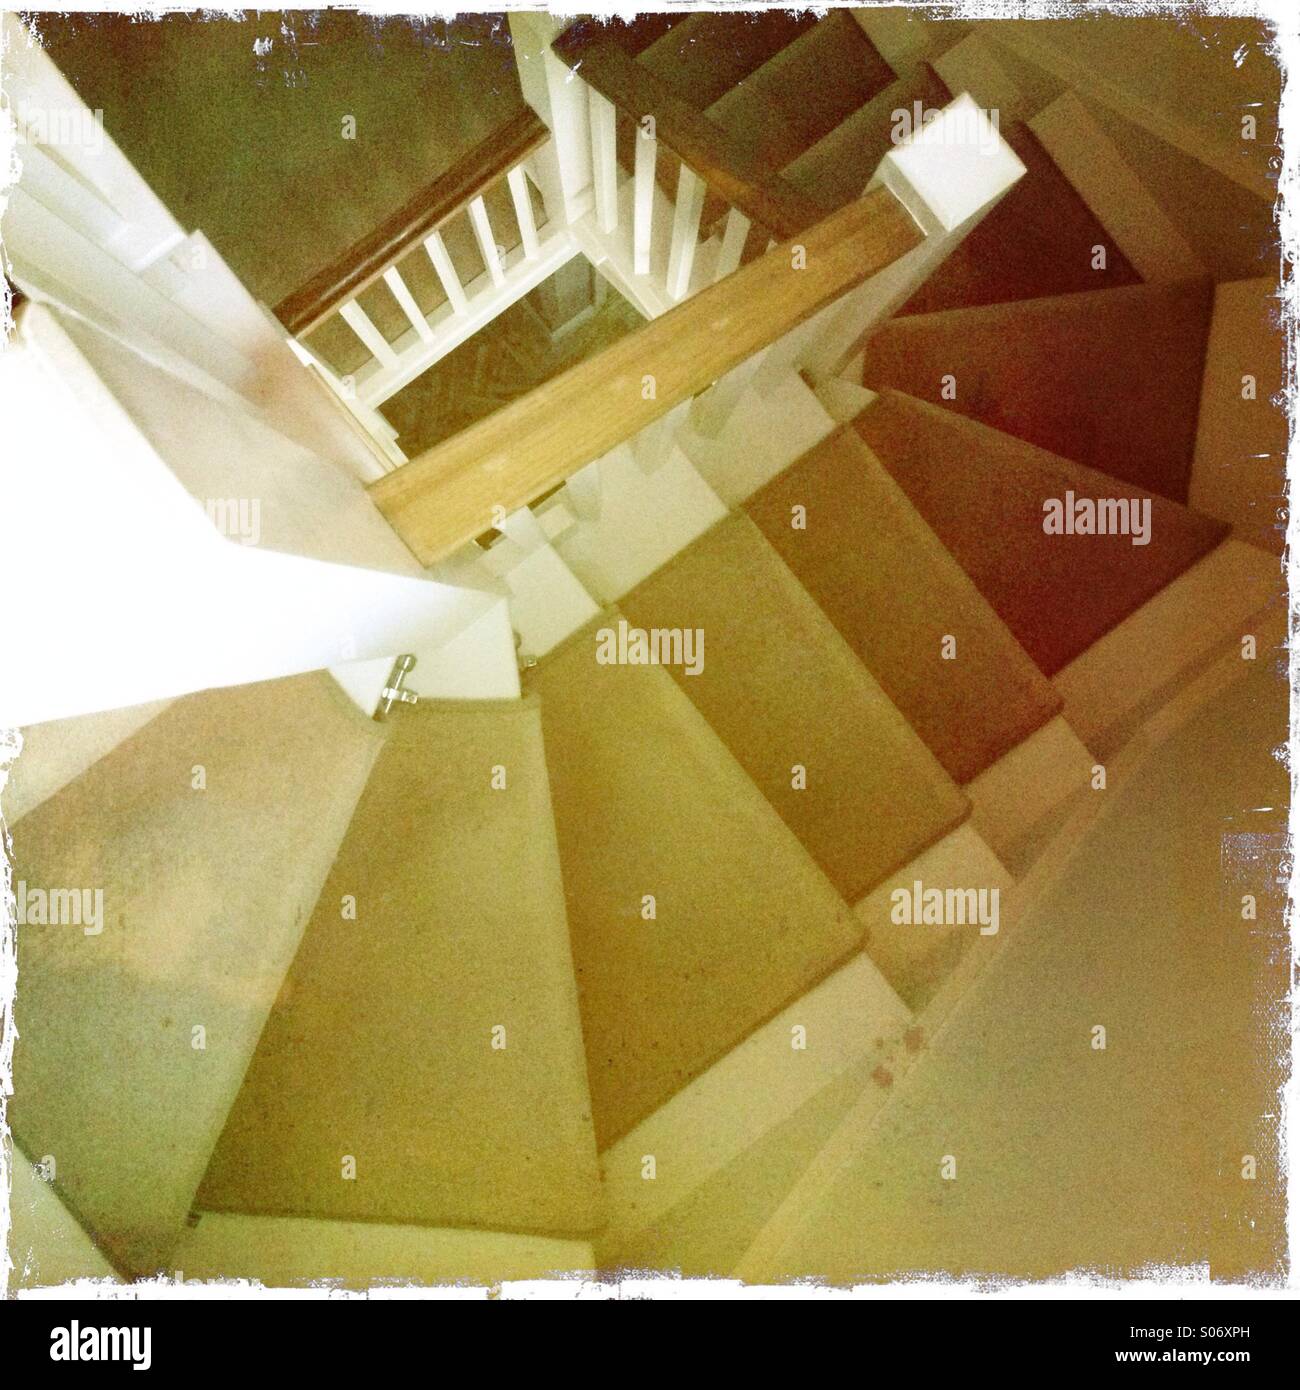 Spiral staircase in domestic interior Stock Photo